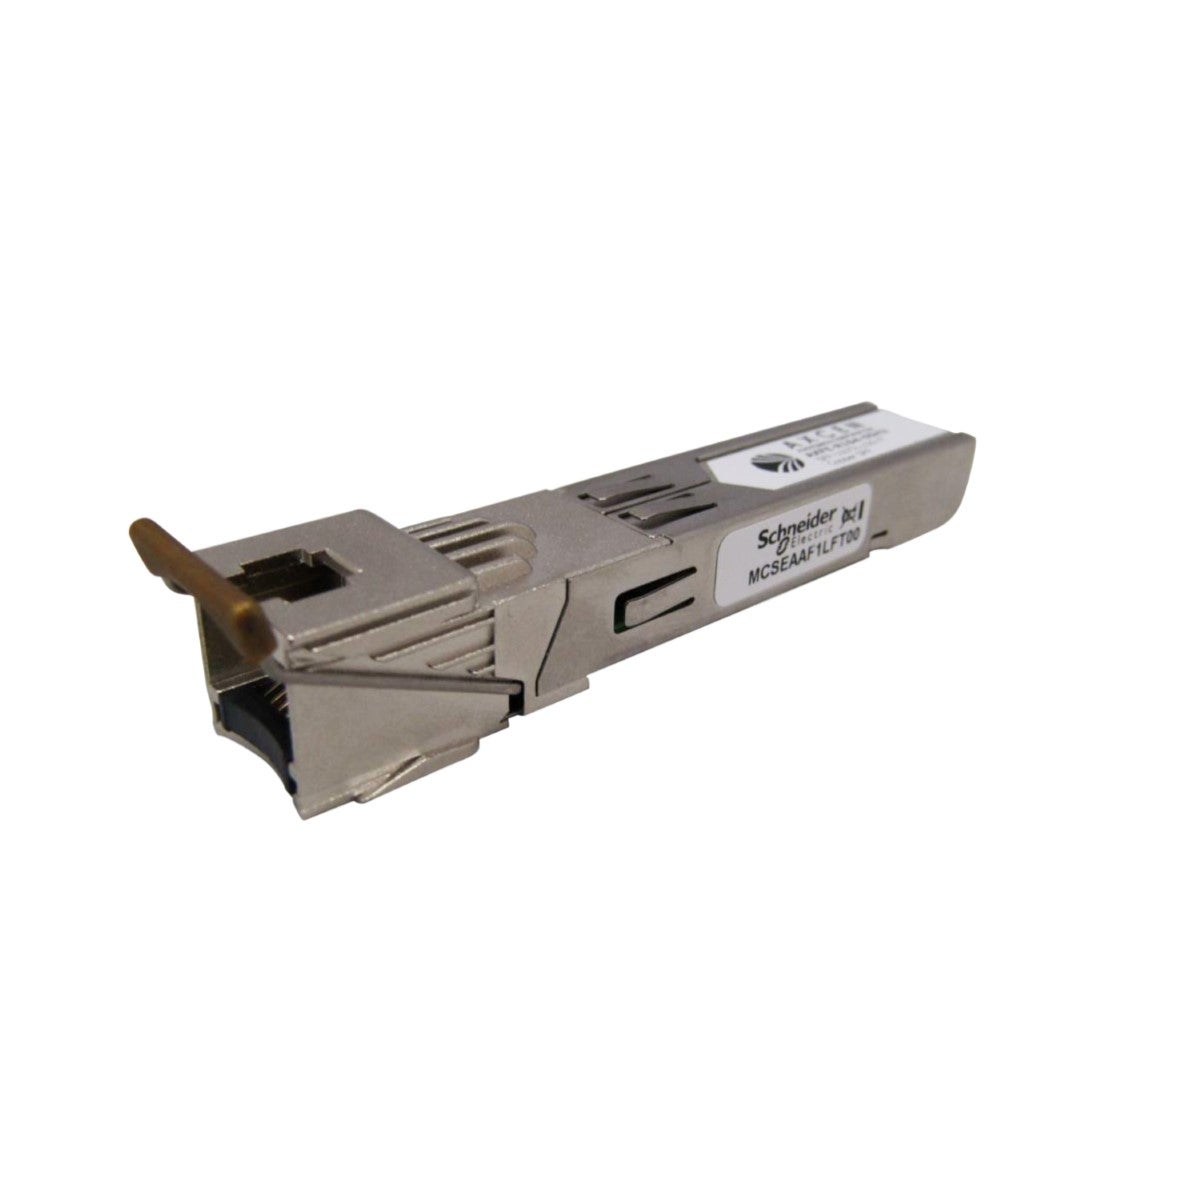 Copper SFP module for Ethernet Switch - 10/100 BASE - TX/RJ45